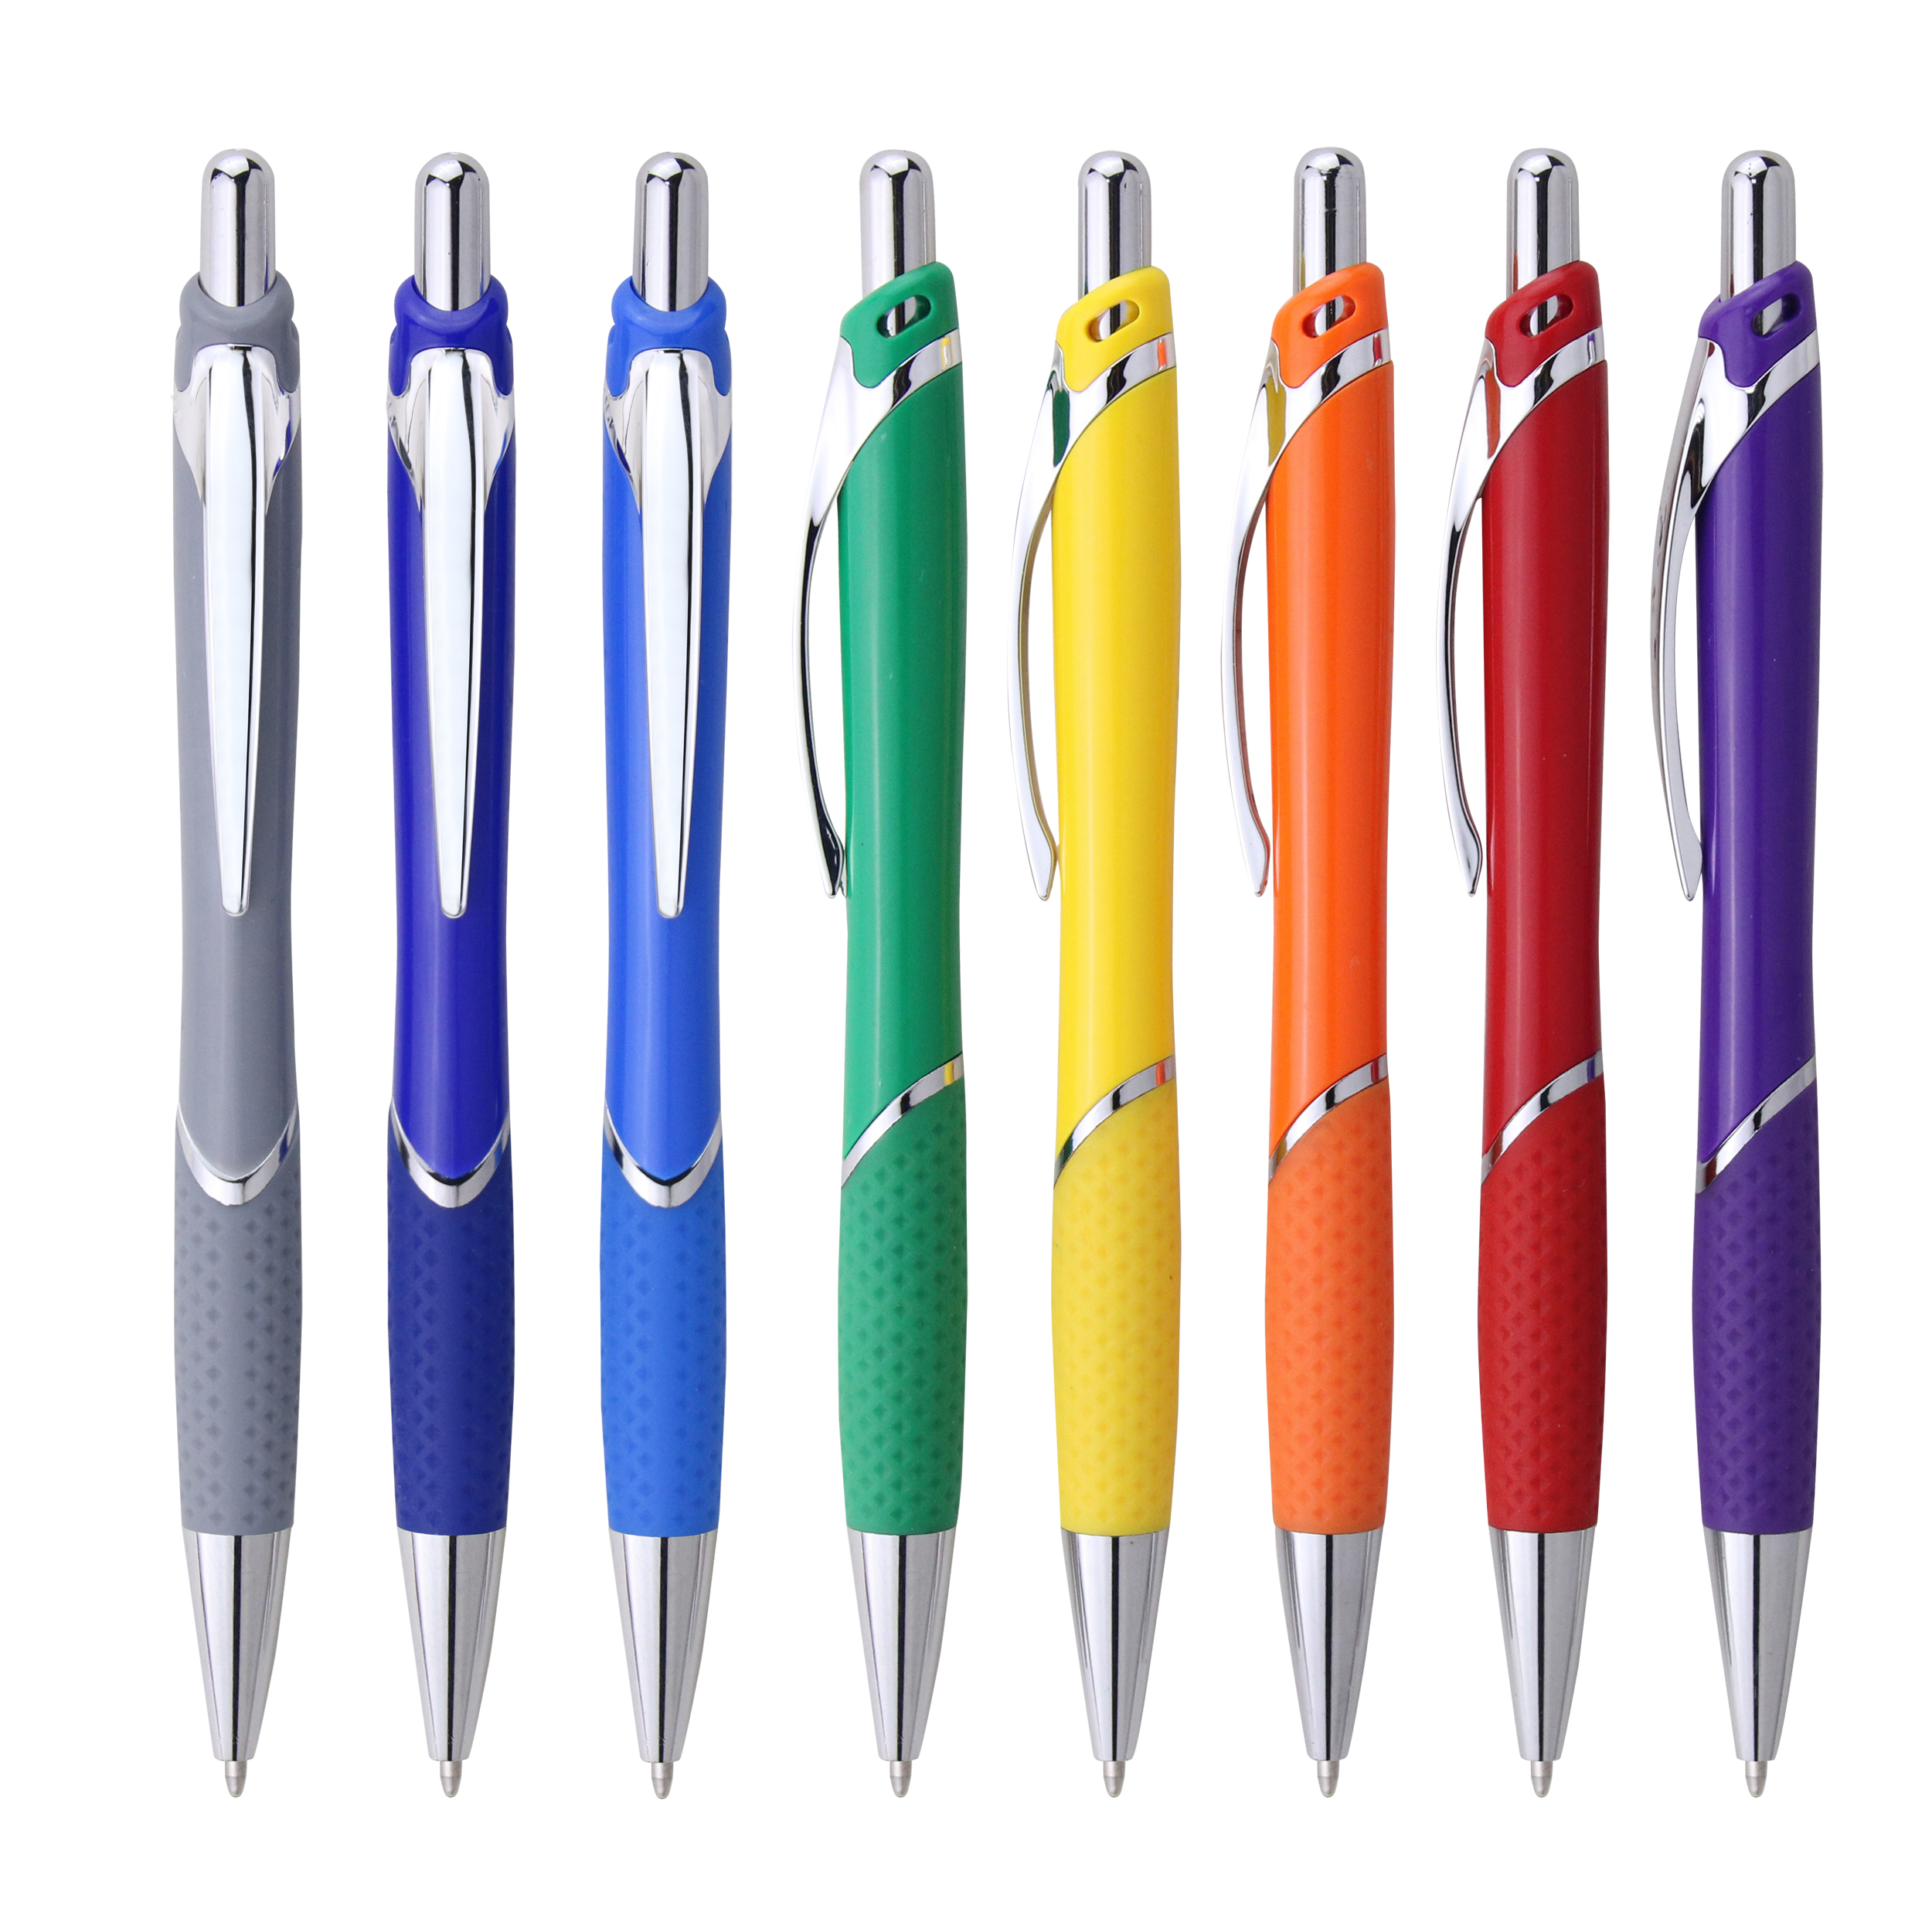 PP86216A plastic ballpoint pen 